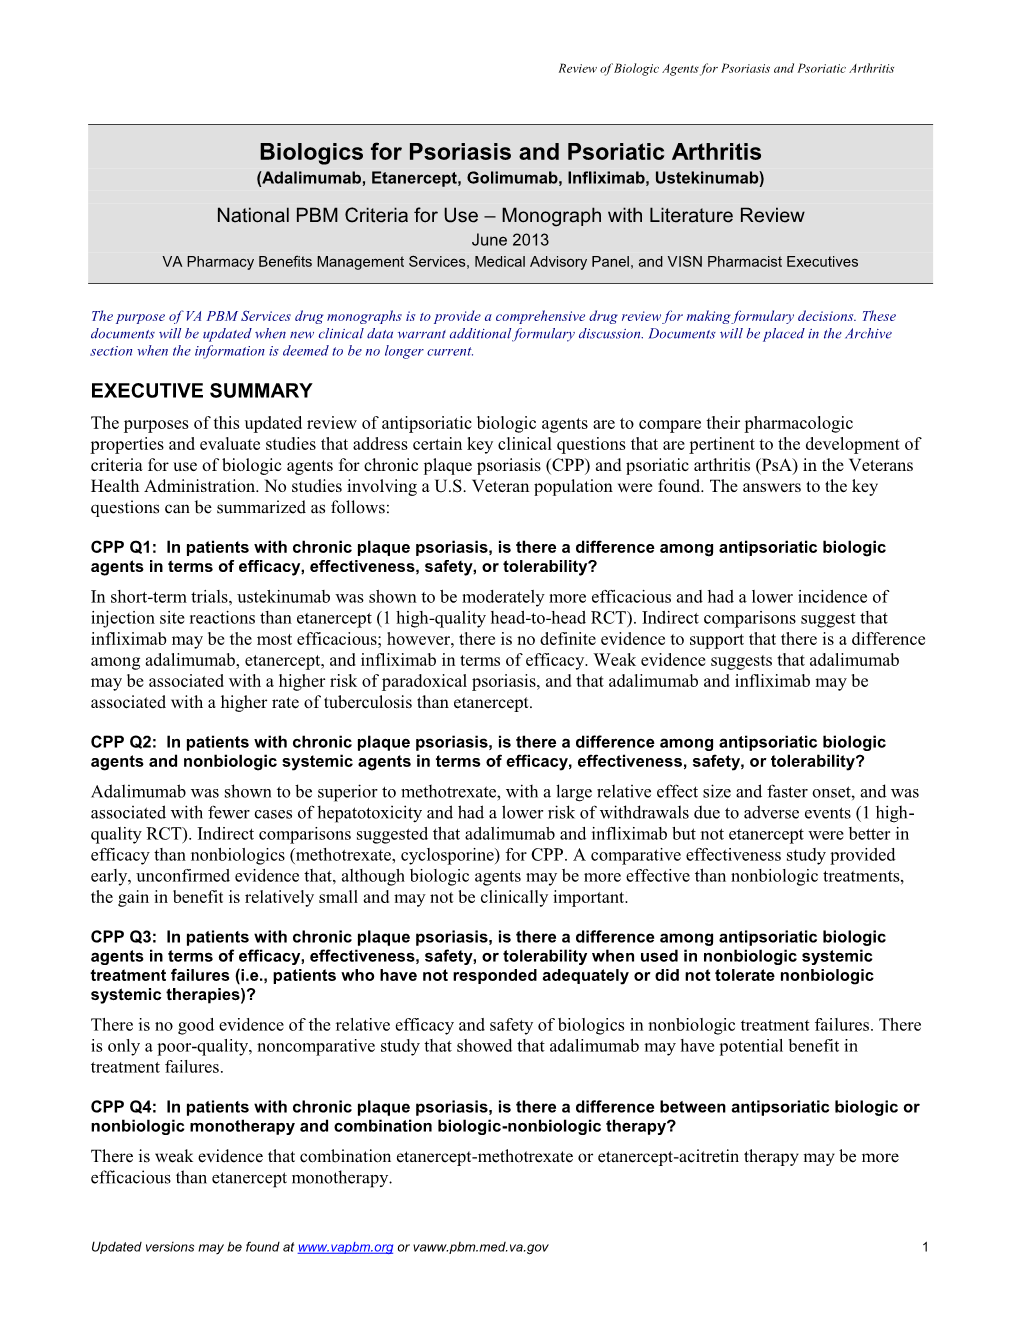 Biologics for Psoriasis and Psoriatic Arthritis (Adalimumab, Etanercept, Golimumab, Infliximab, Ustekinumab)